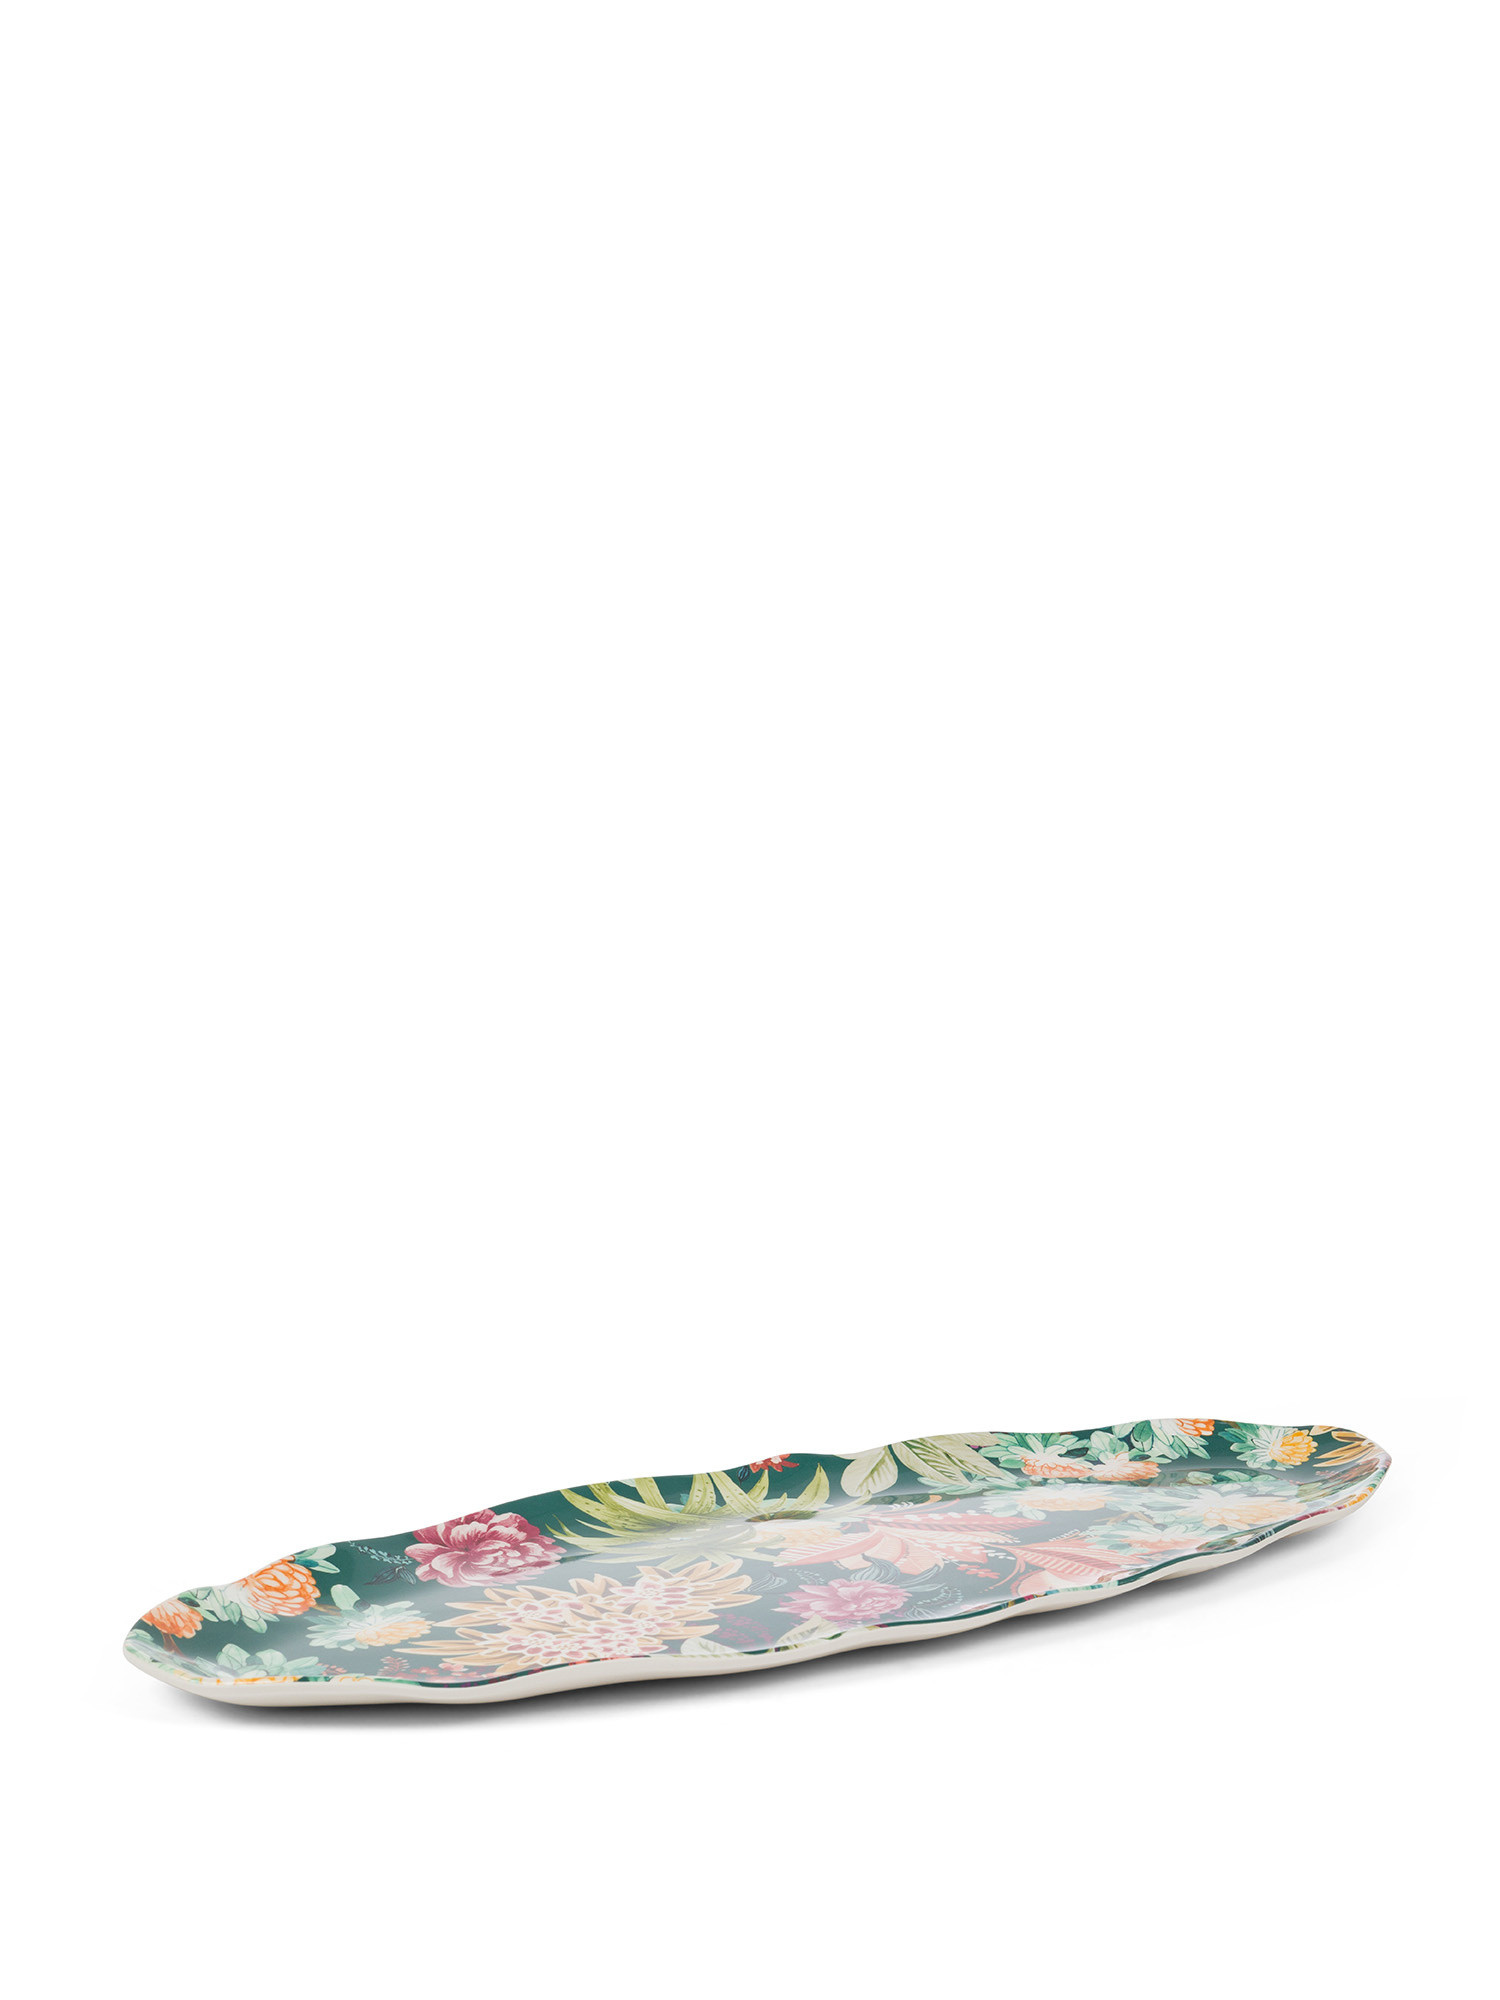 Piatto ovale melamina fiori, Multicolor, large image number 0